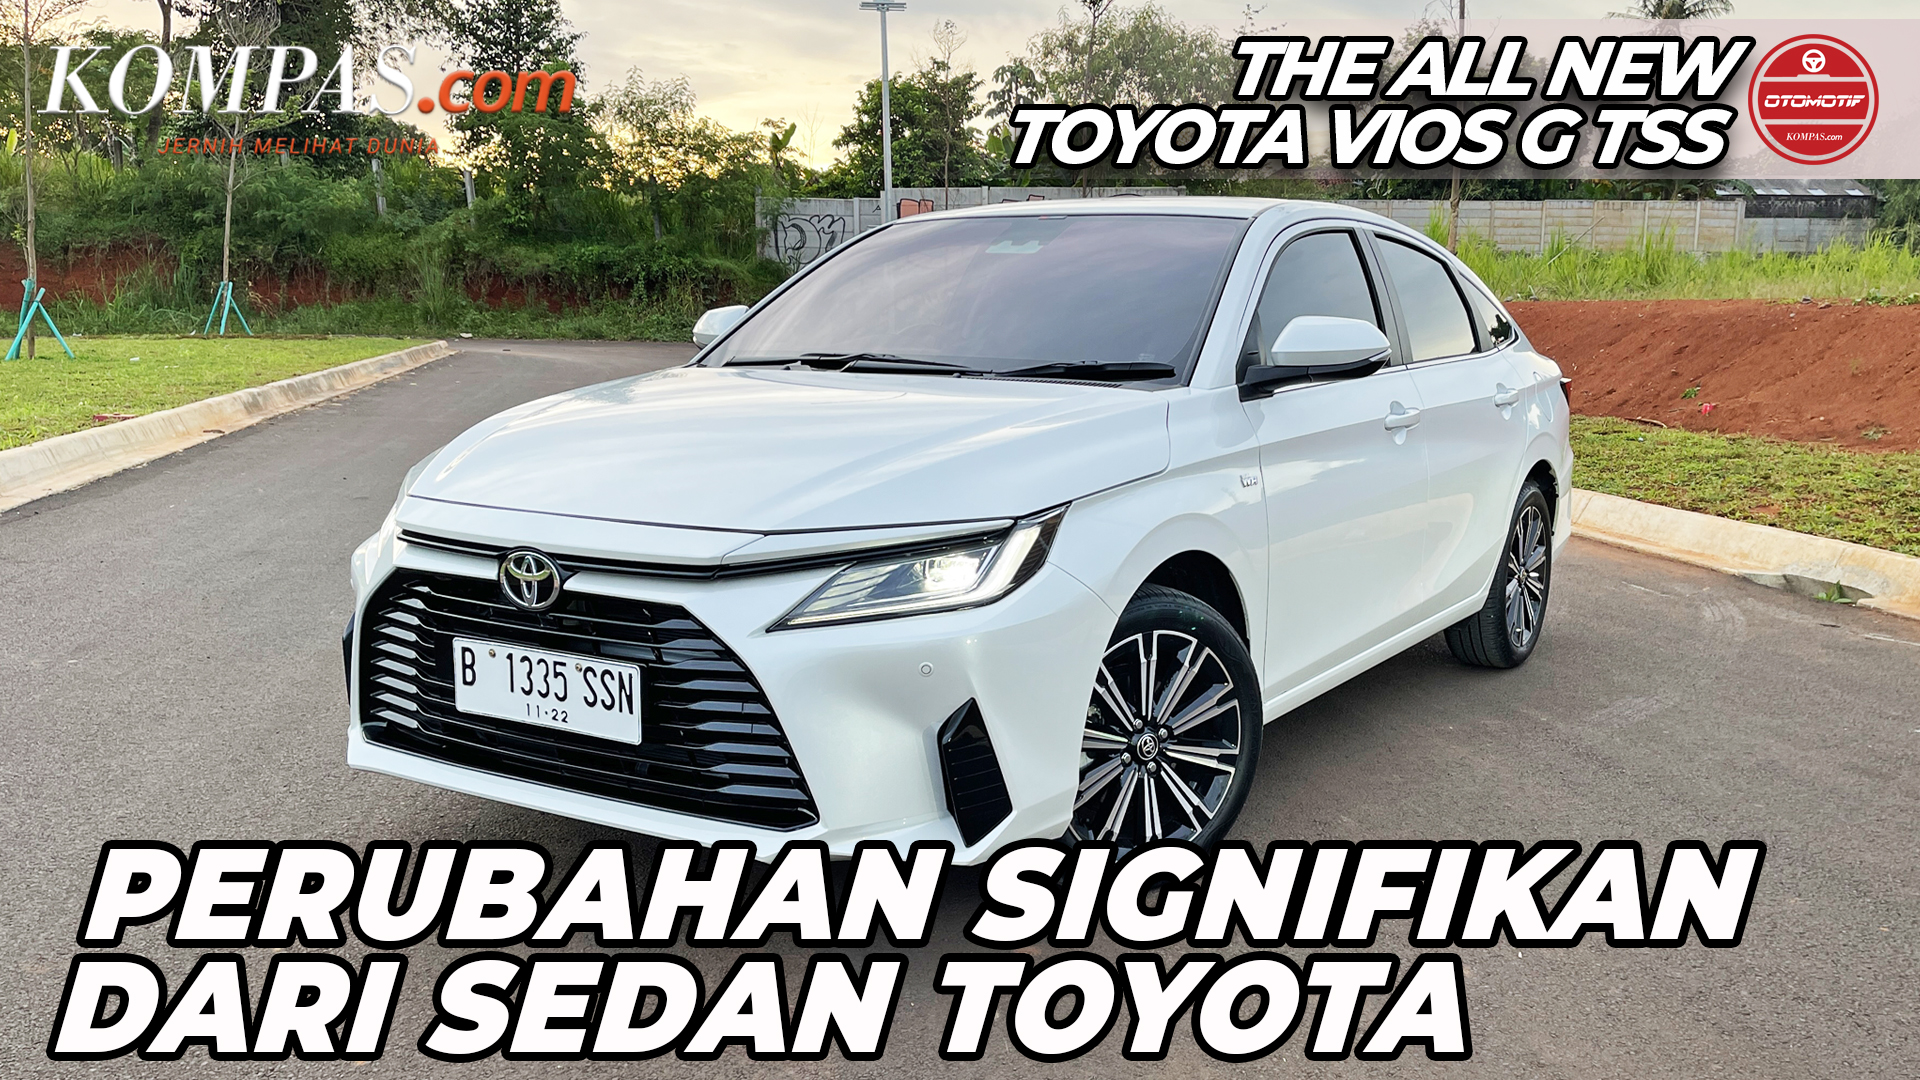 The All New Toyota Vios 1.5L G TSS | Perubahan Signifikan Dari Sedan Toyota